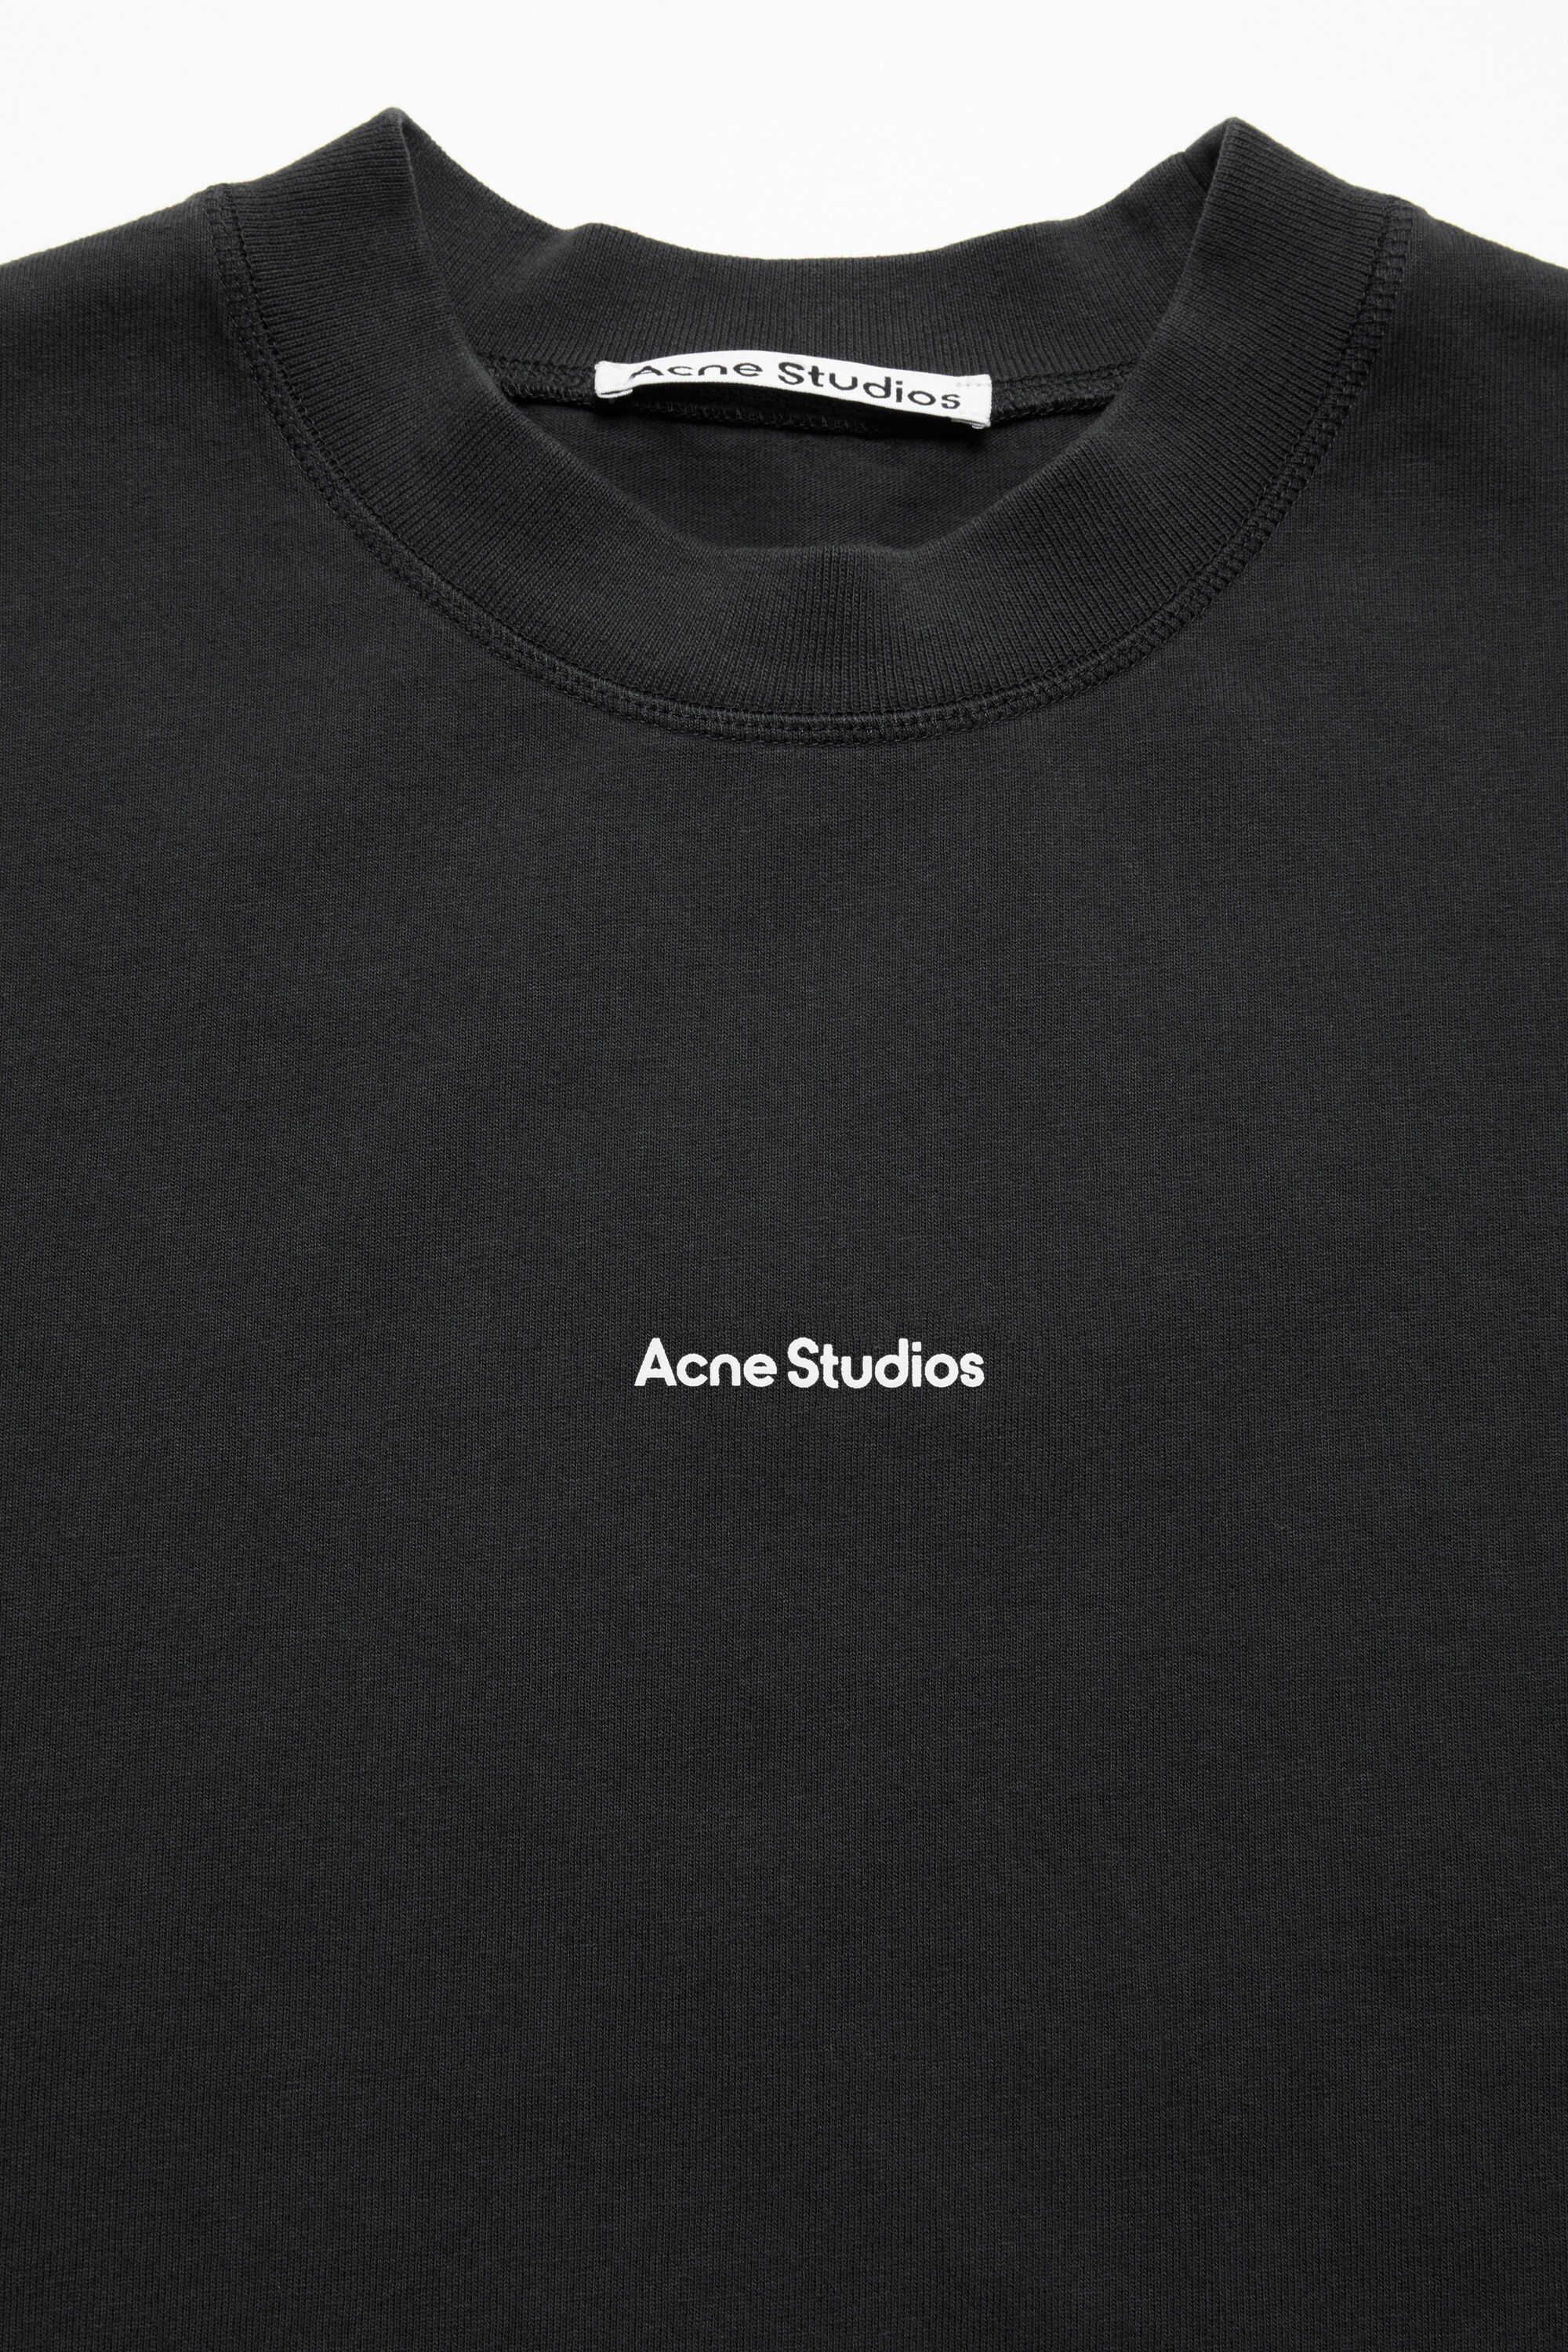 【AcneStudios】アクネストゥディオズ/Tシャツ/黒/L/美品メンズ